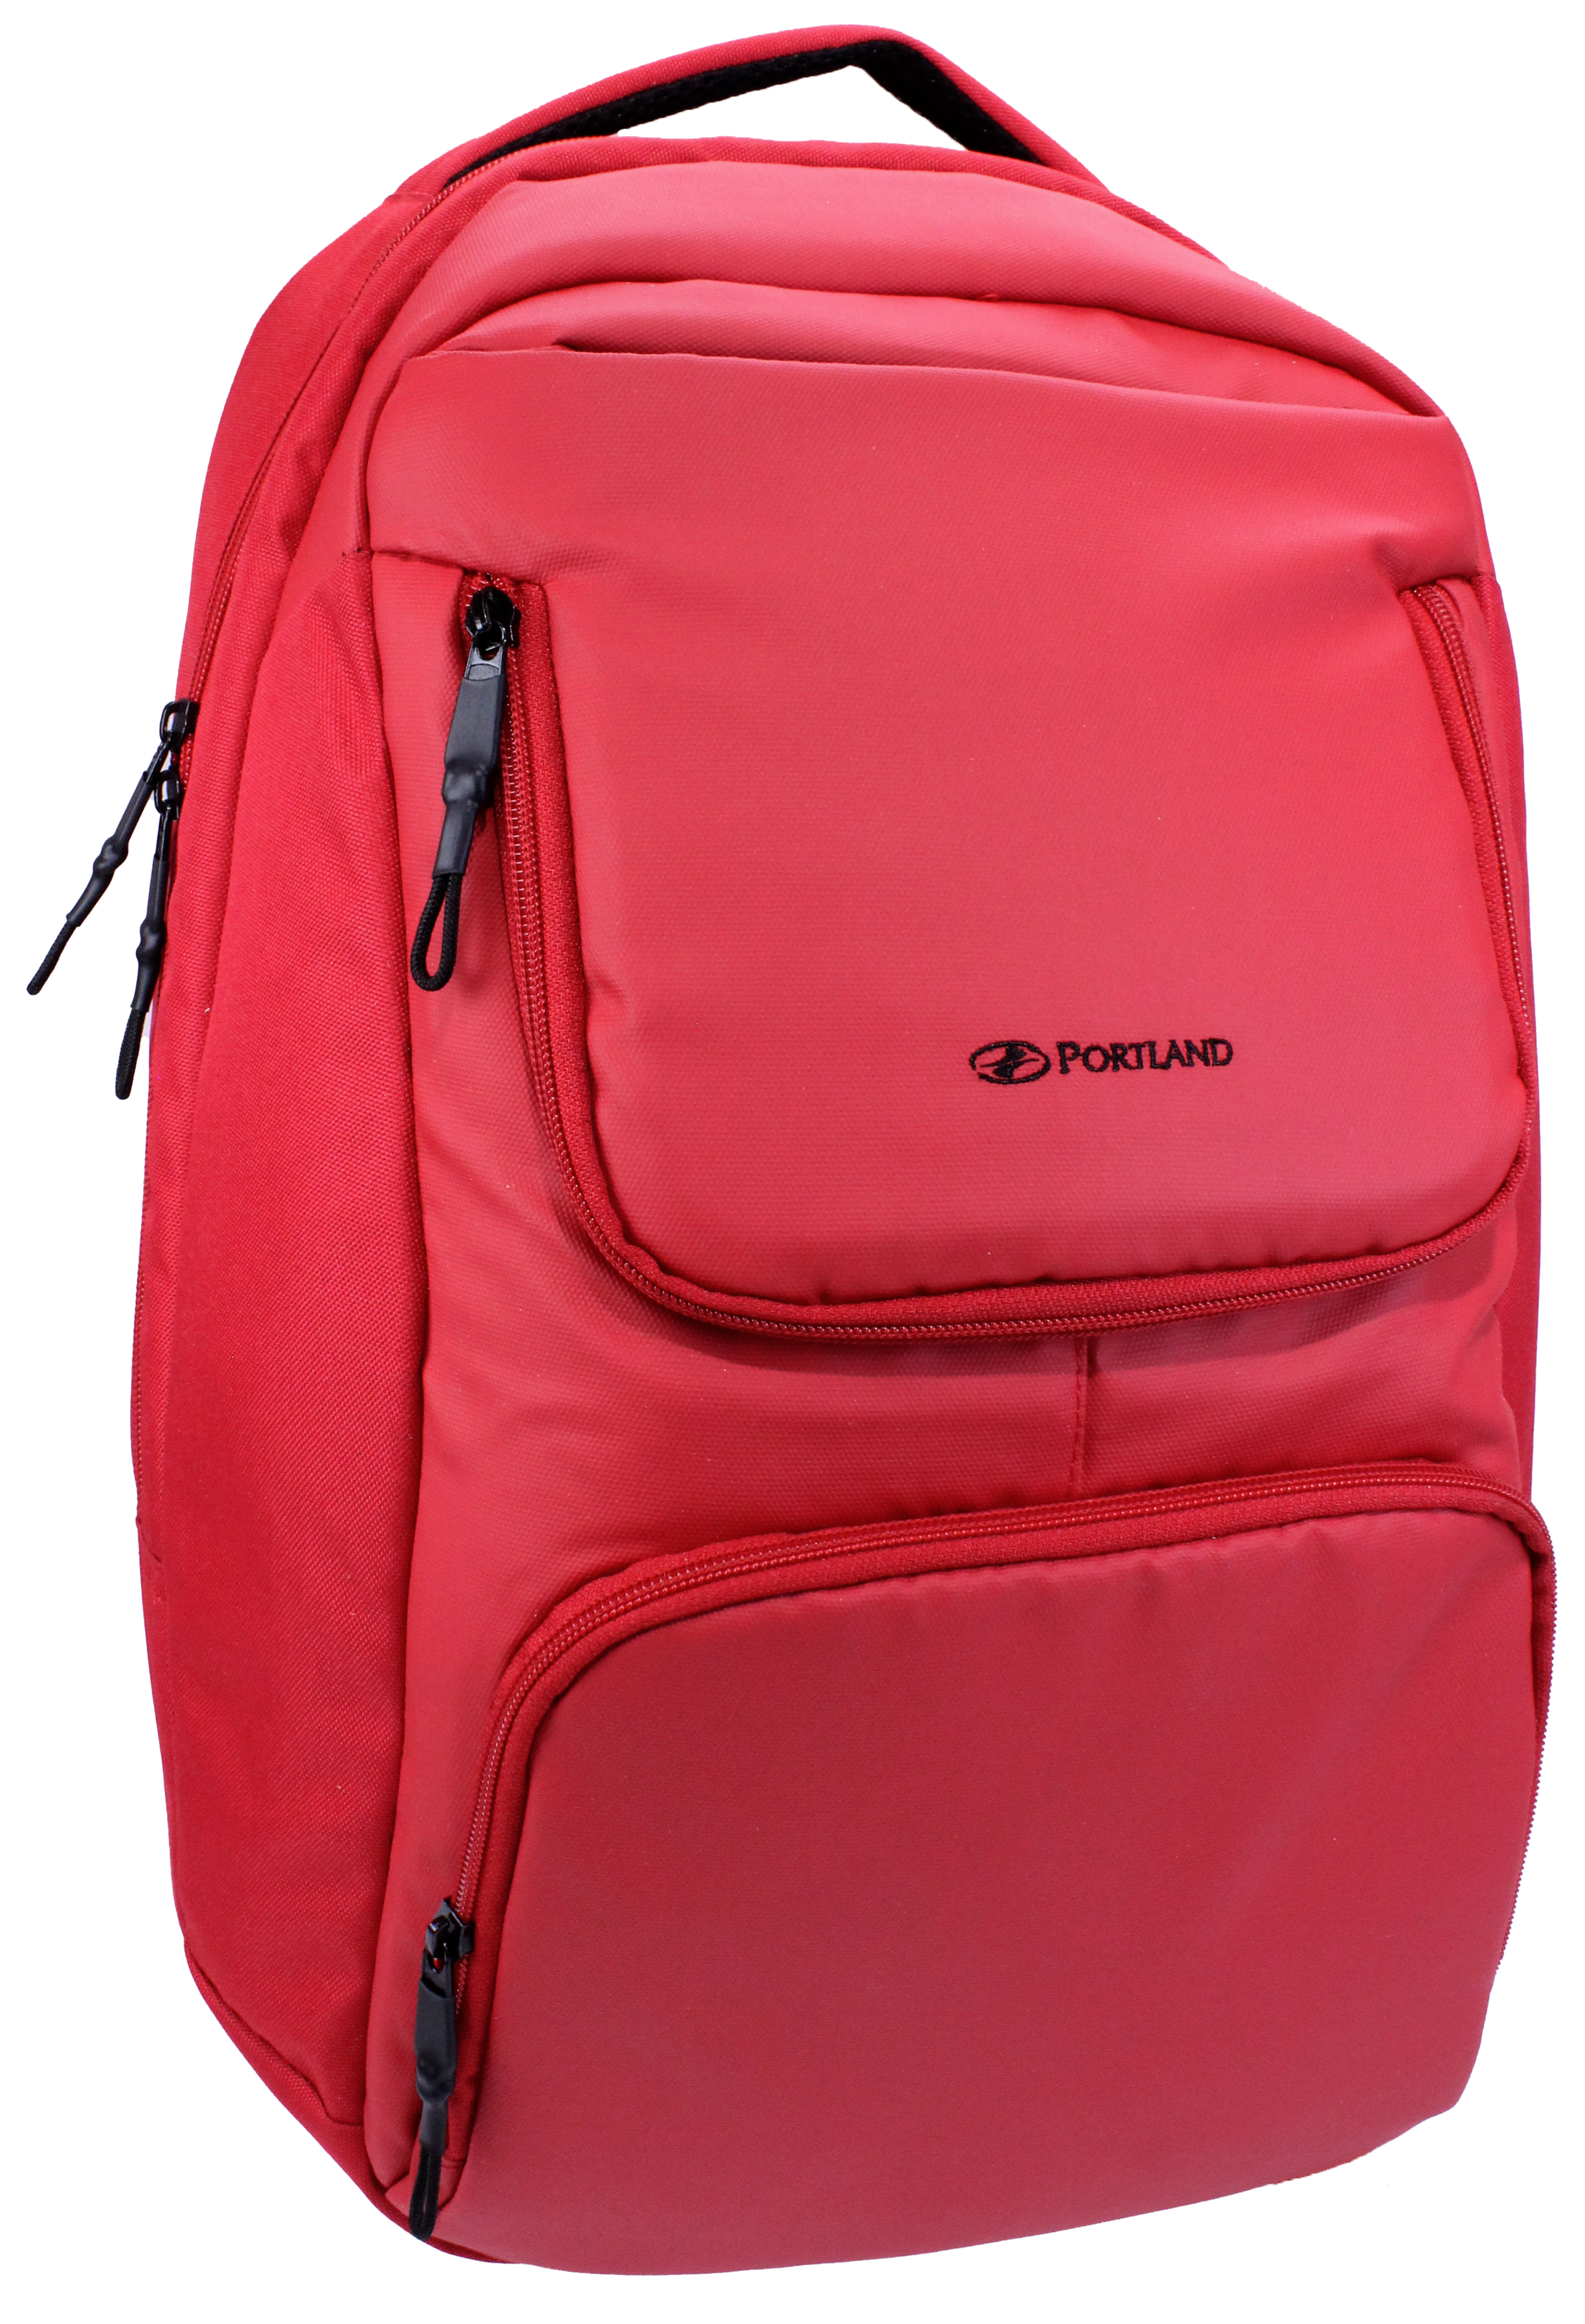 Portland Laptop Backpack Red